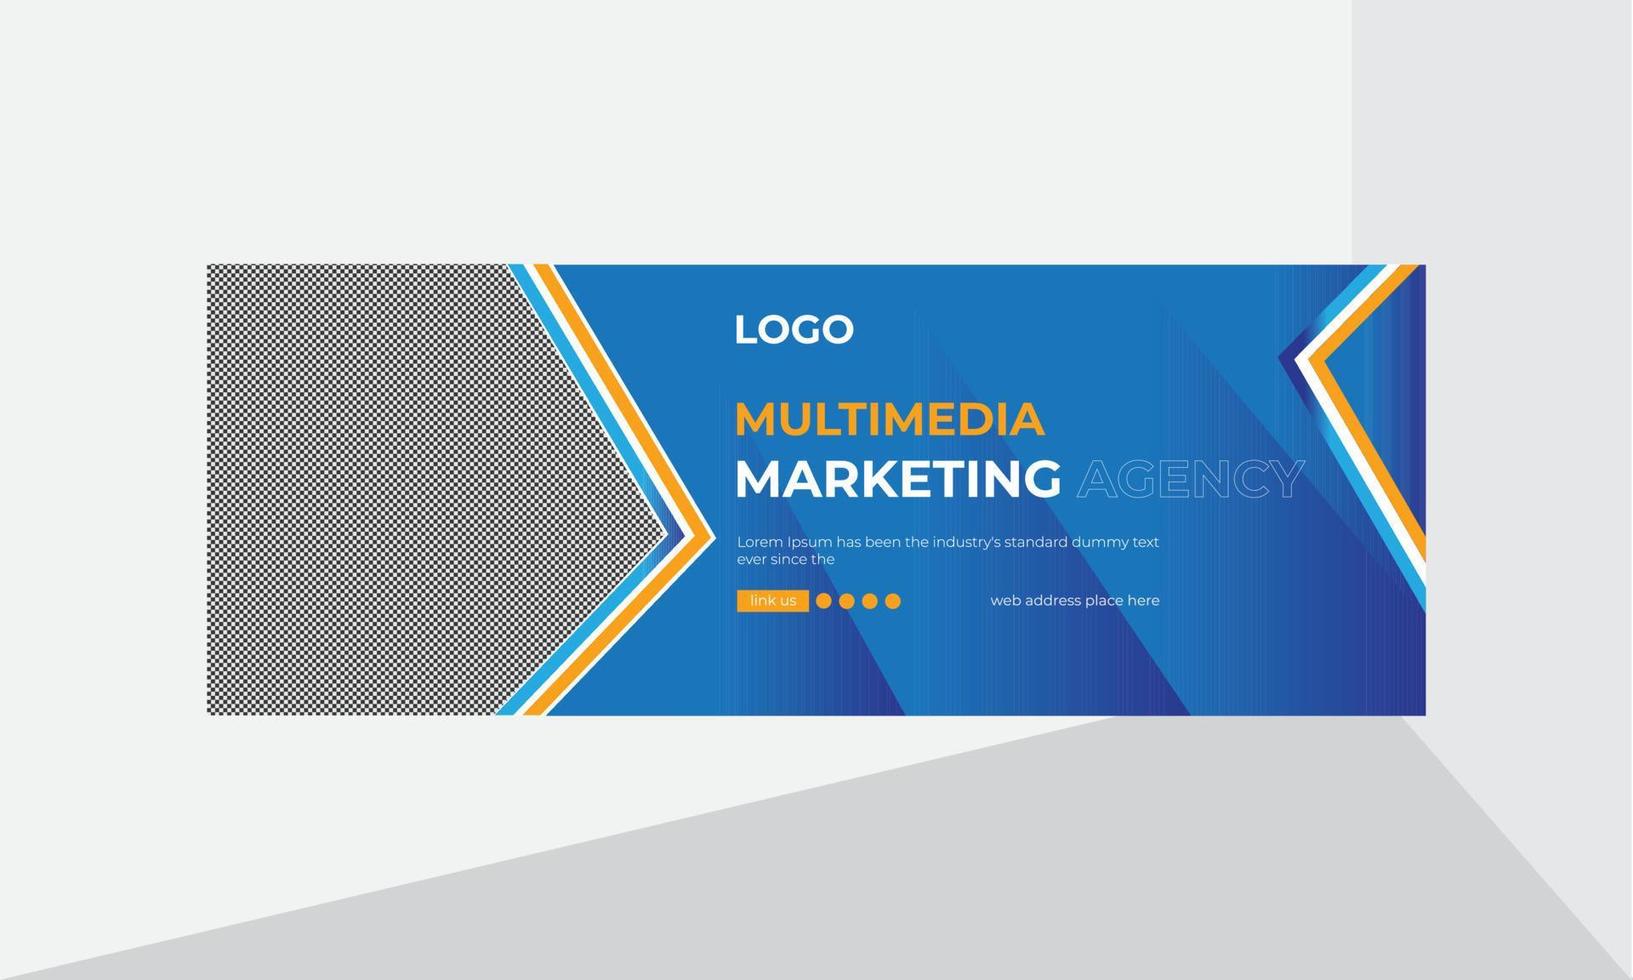 Multimedia marketing agency Facebook cover design template vector